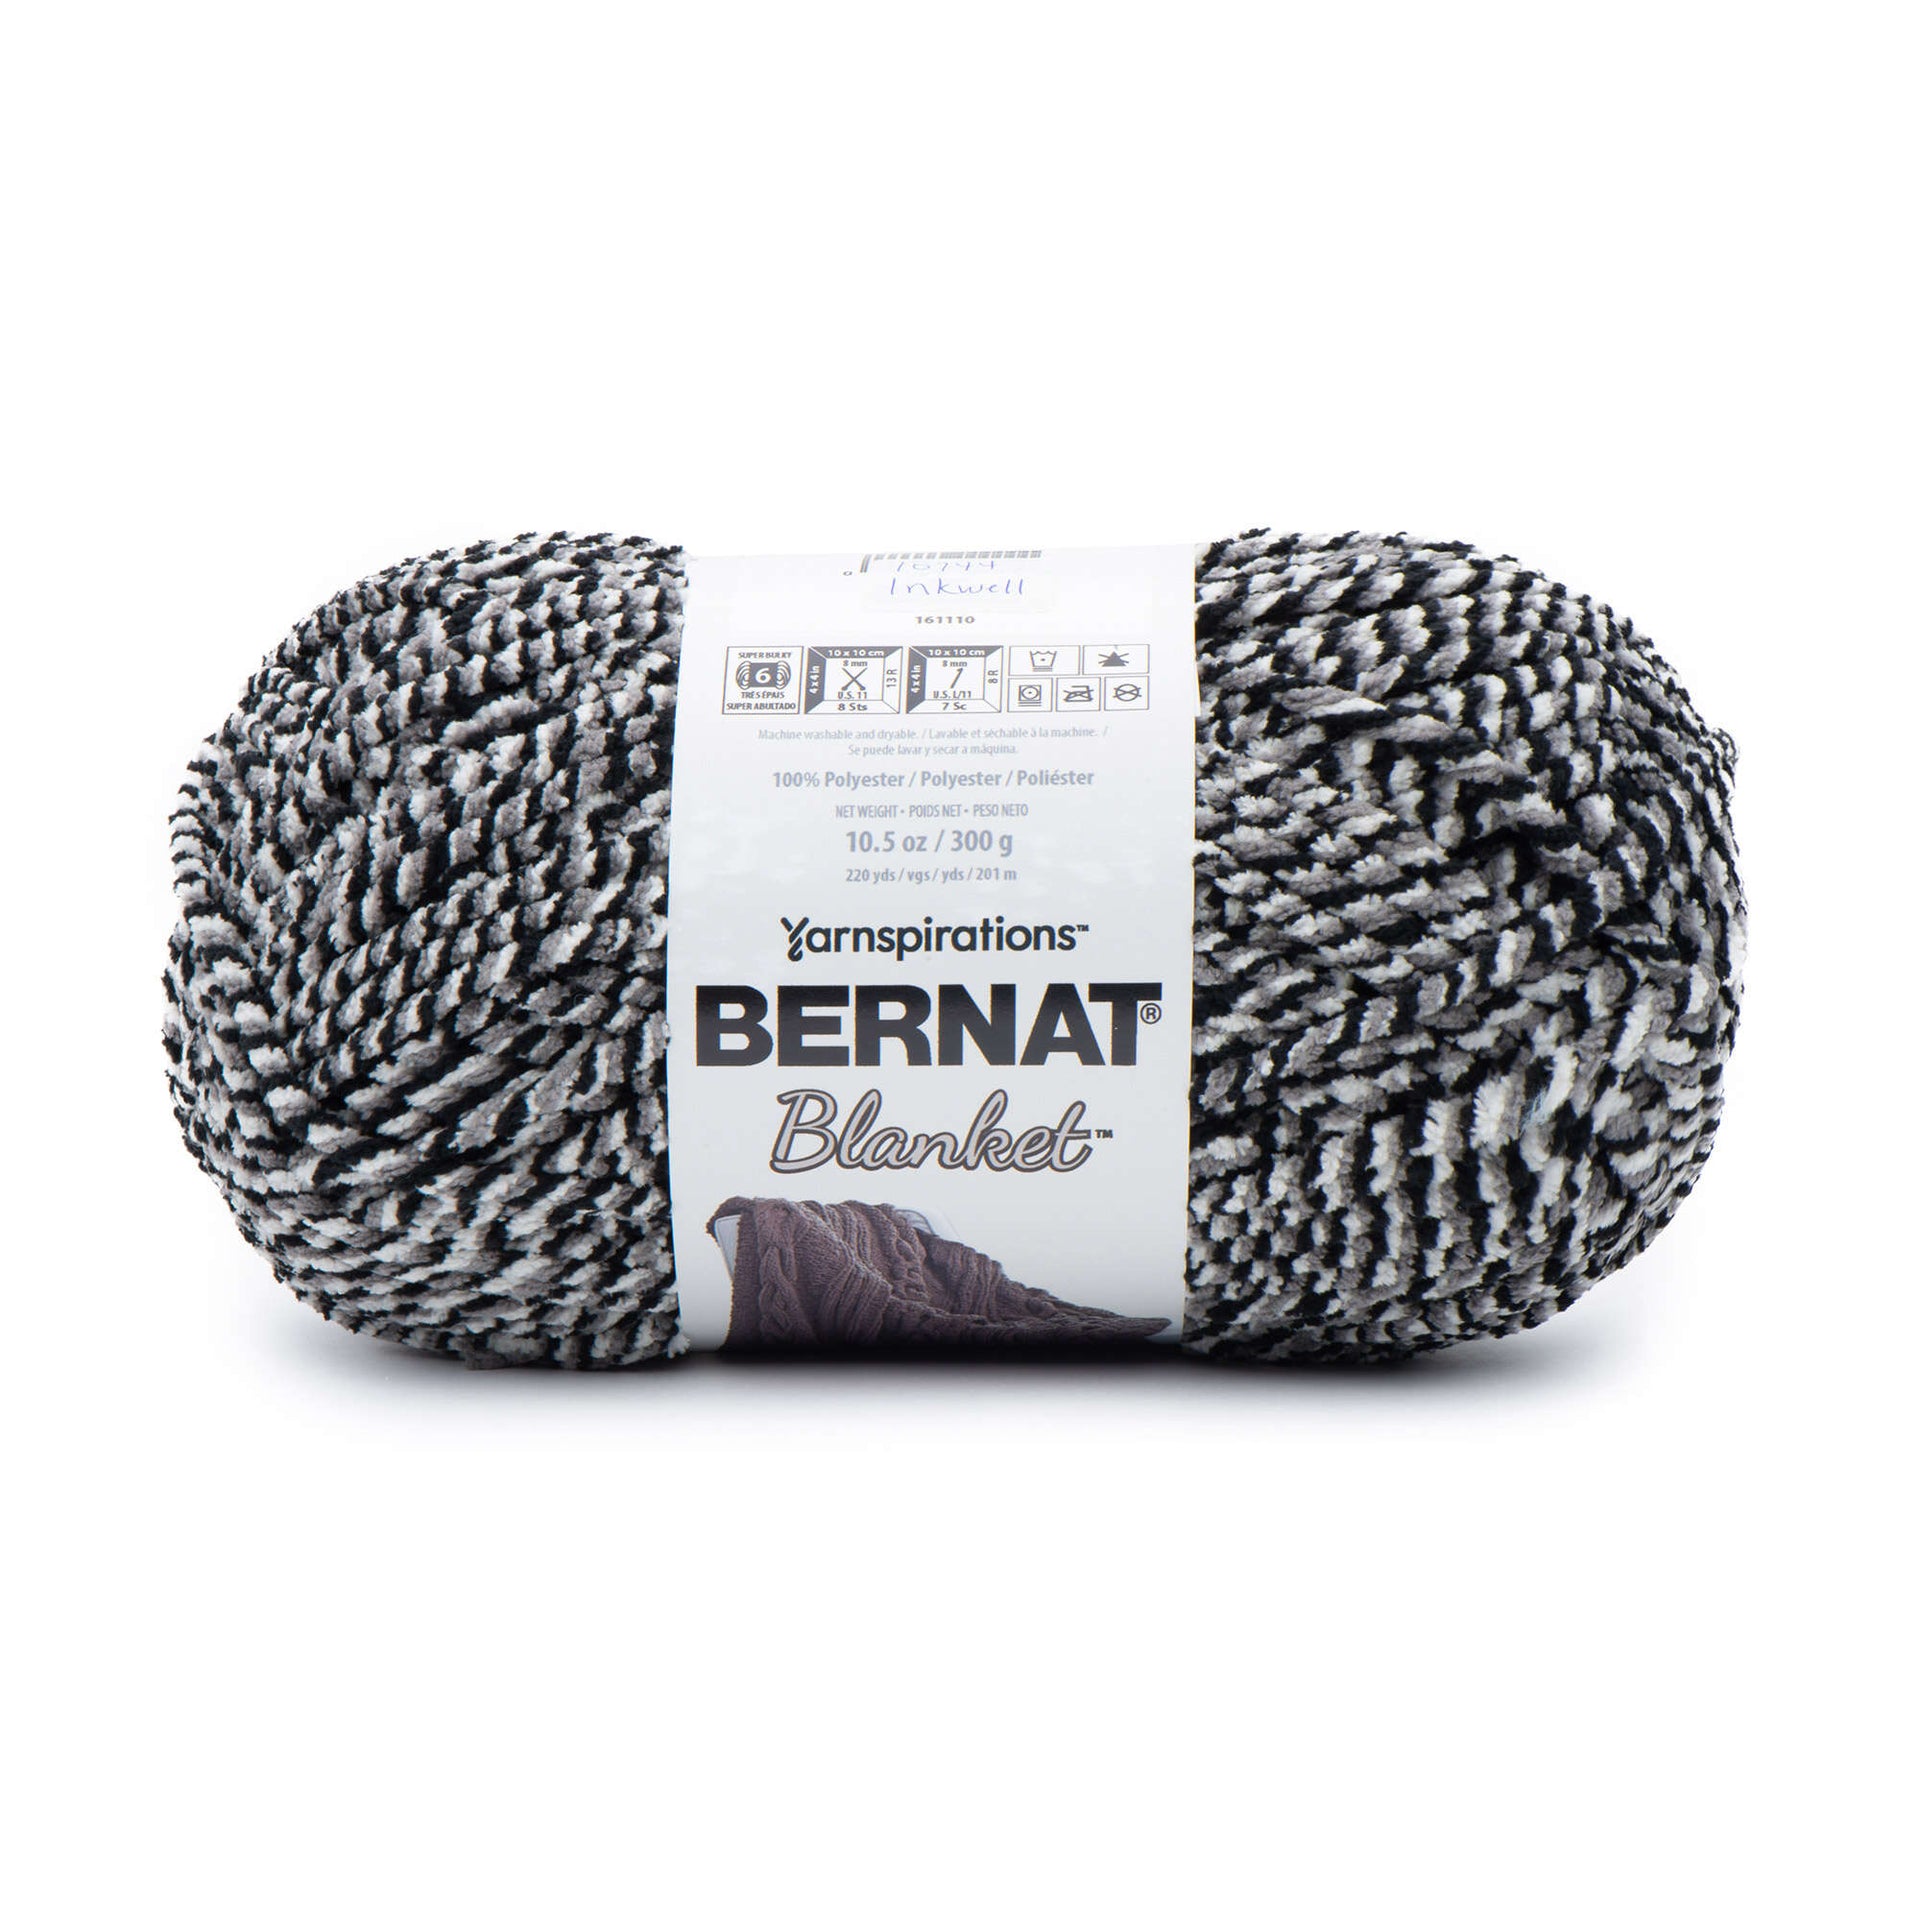 Bernat Blanket Brights 300g Bright Pink Yarn - 2 Pack of 300g/10.5oz - Polyester - 6 Super Bulky - Knitting/Crochet